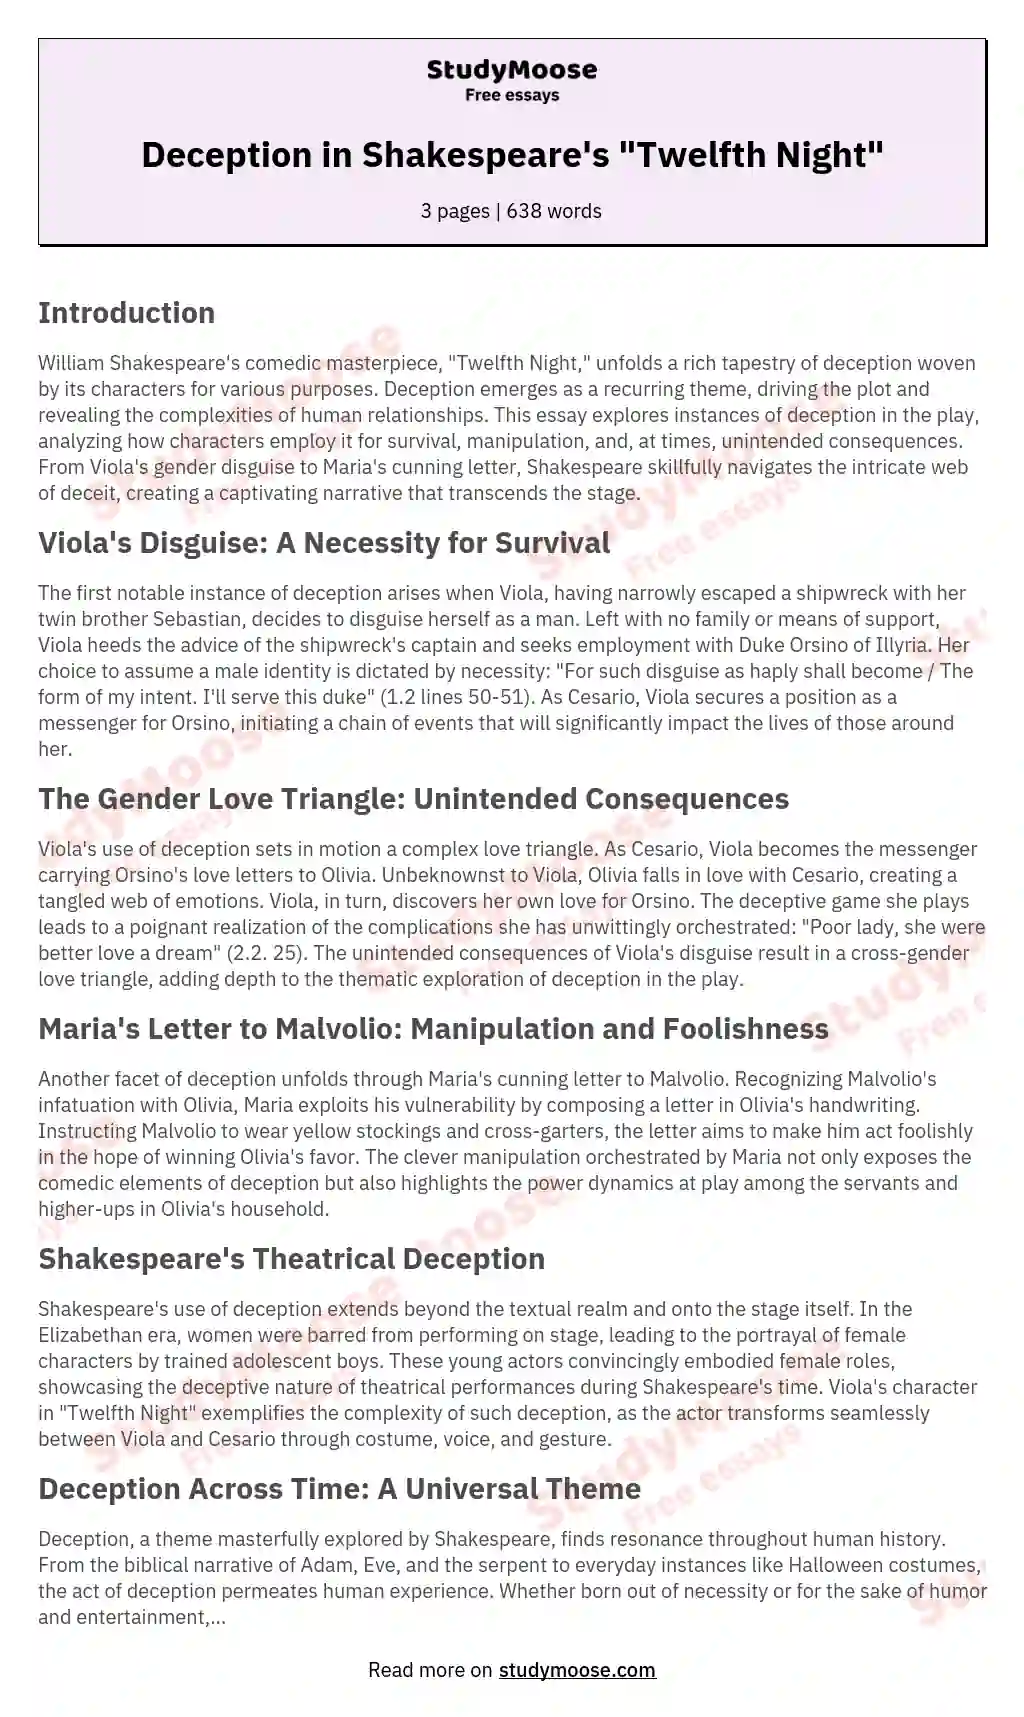 Deception in Shakespeare's "Twelfth Night" essay